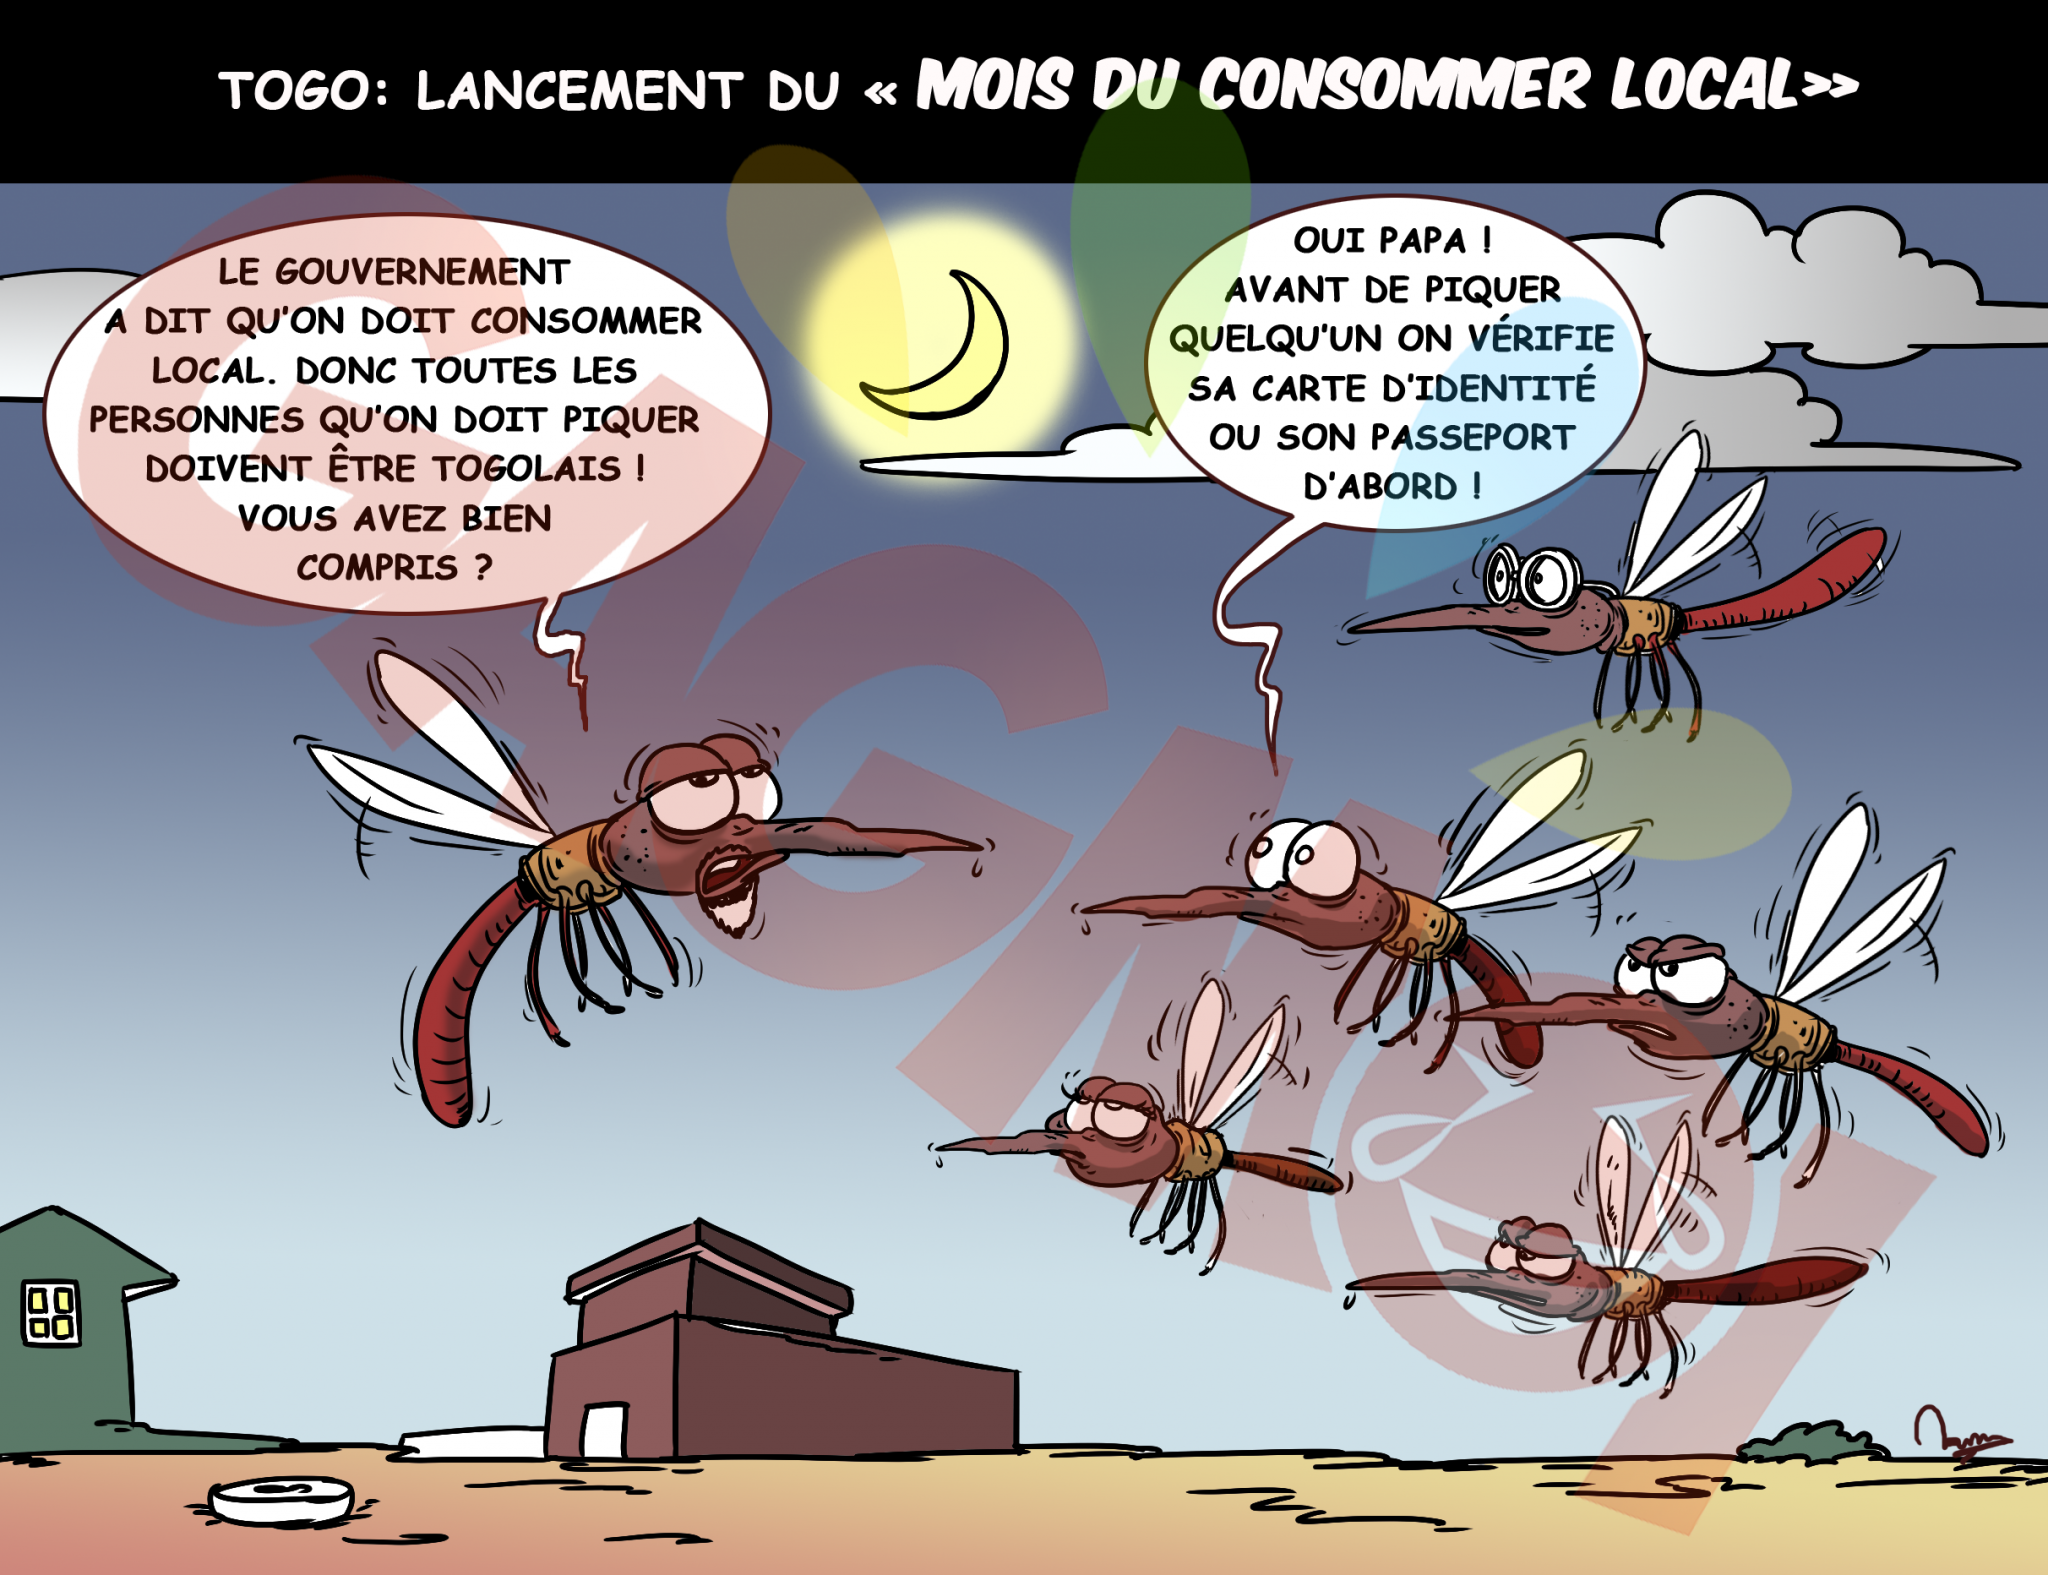 Consommer Local#Togo# promotion#Dessinsgag#humourAfrique#cartooning